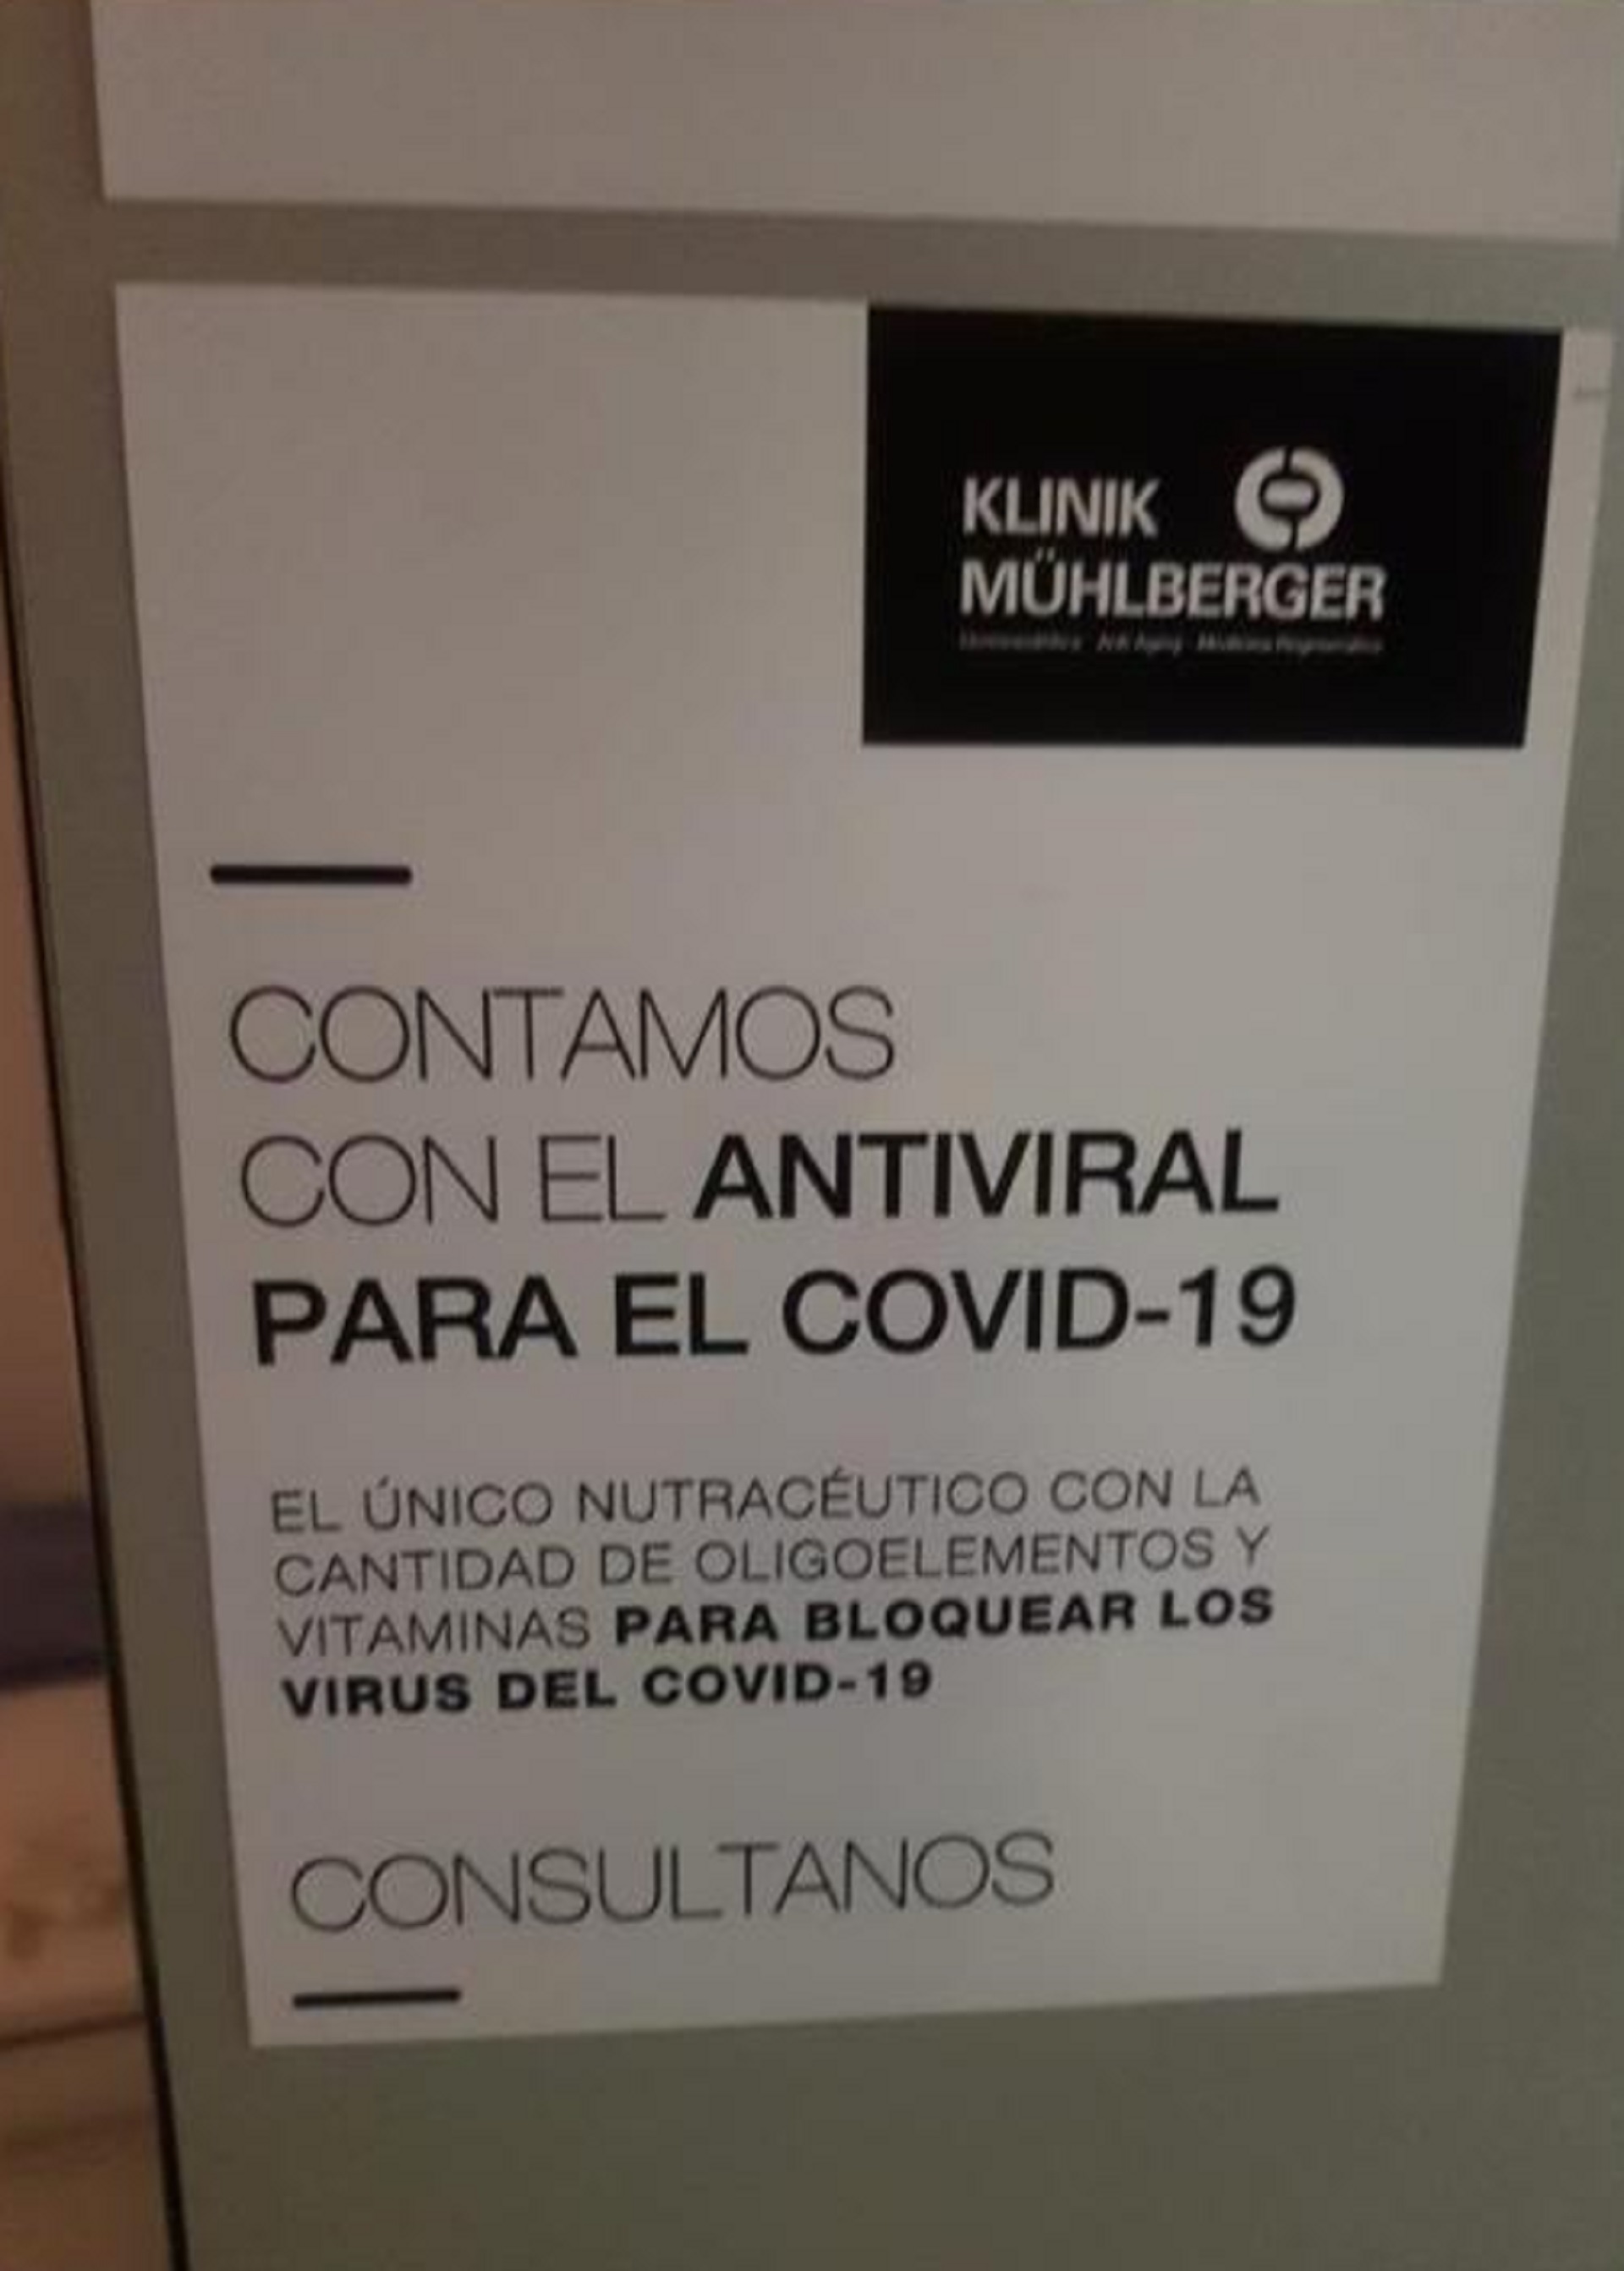 El “antiviral” para el coronavirus, la 